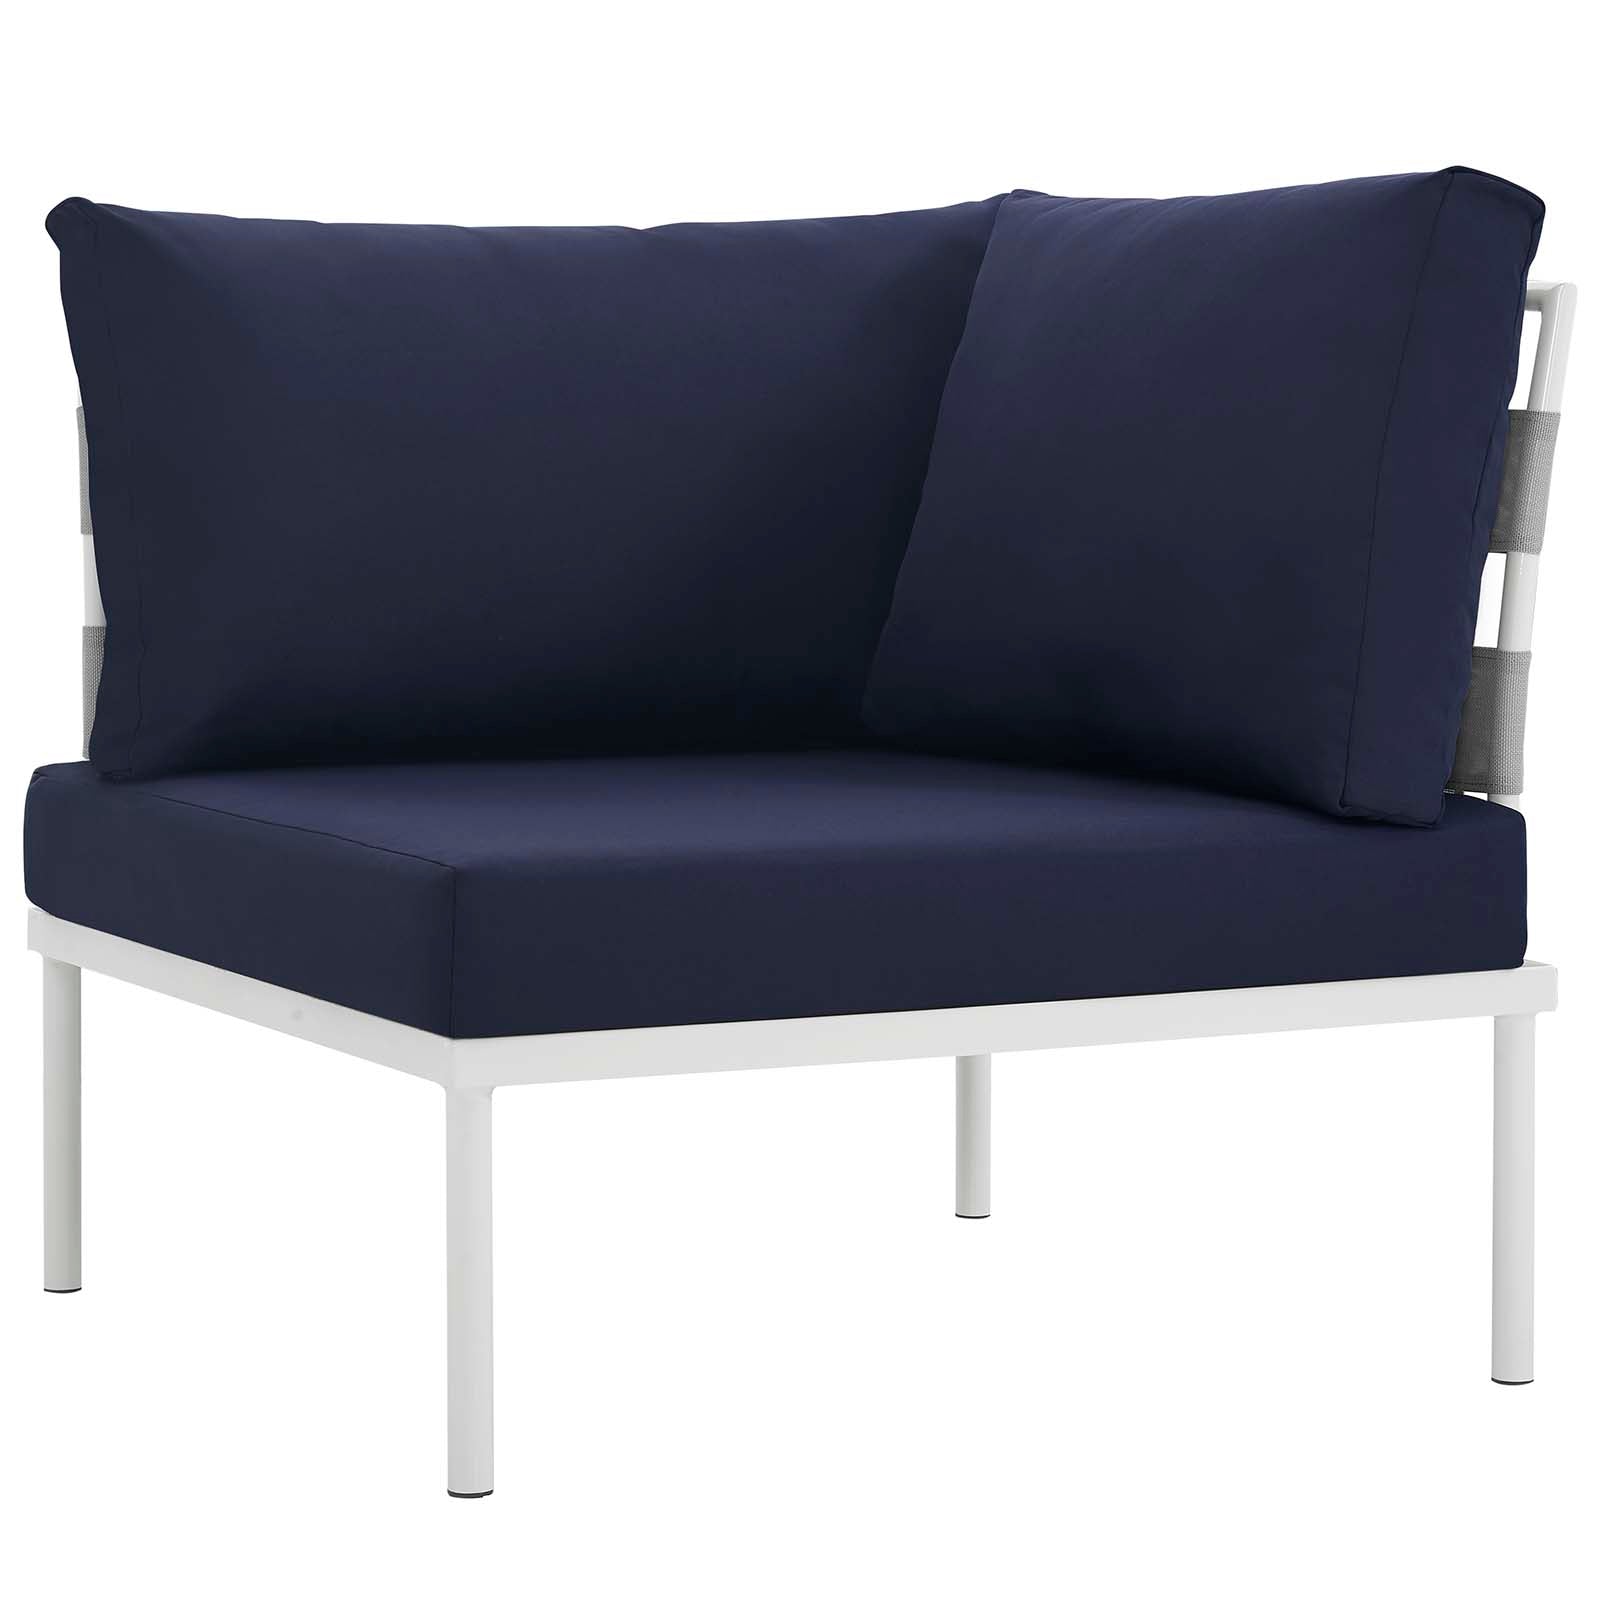 Modway Outdoor Sofas - Harmony 5 Piece Outdoor Patio Sectional Sofa Set White Navy